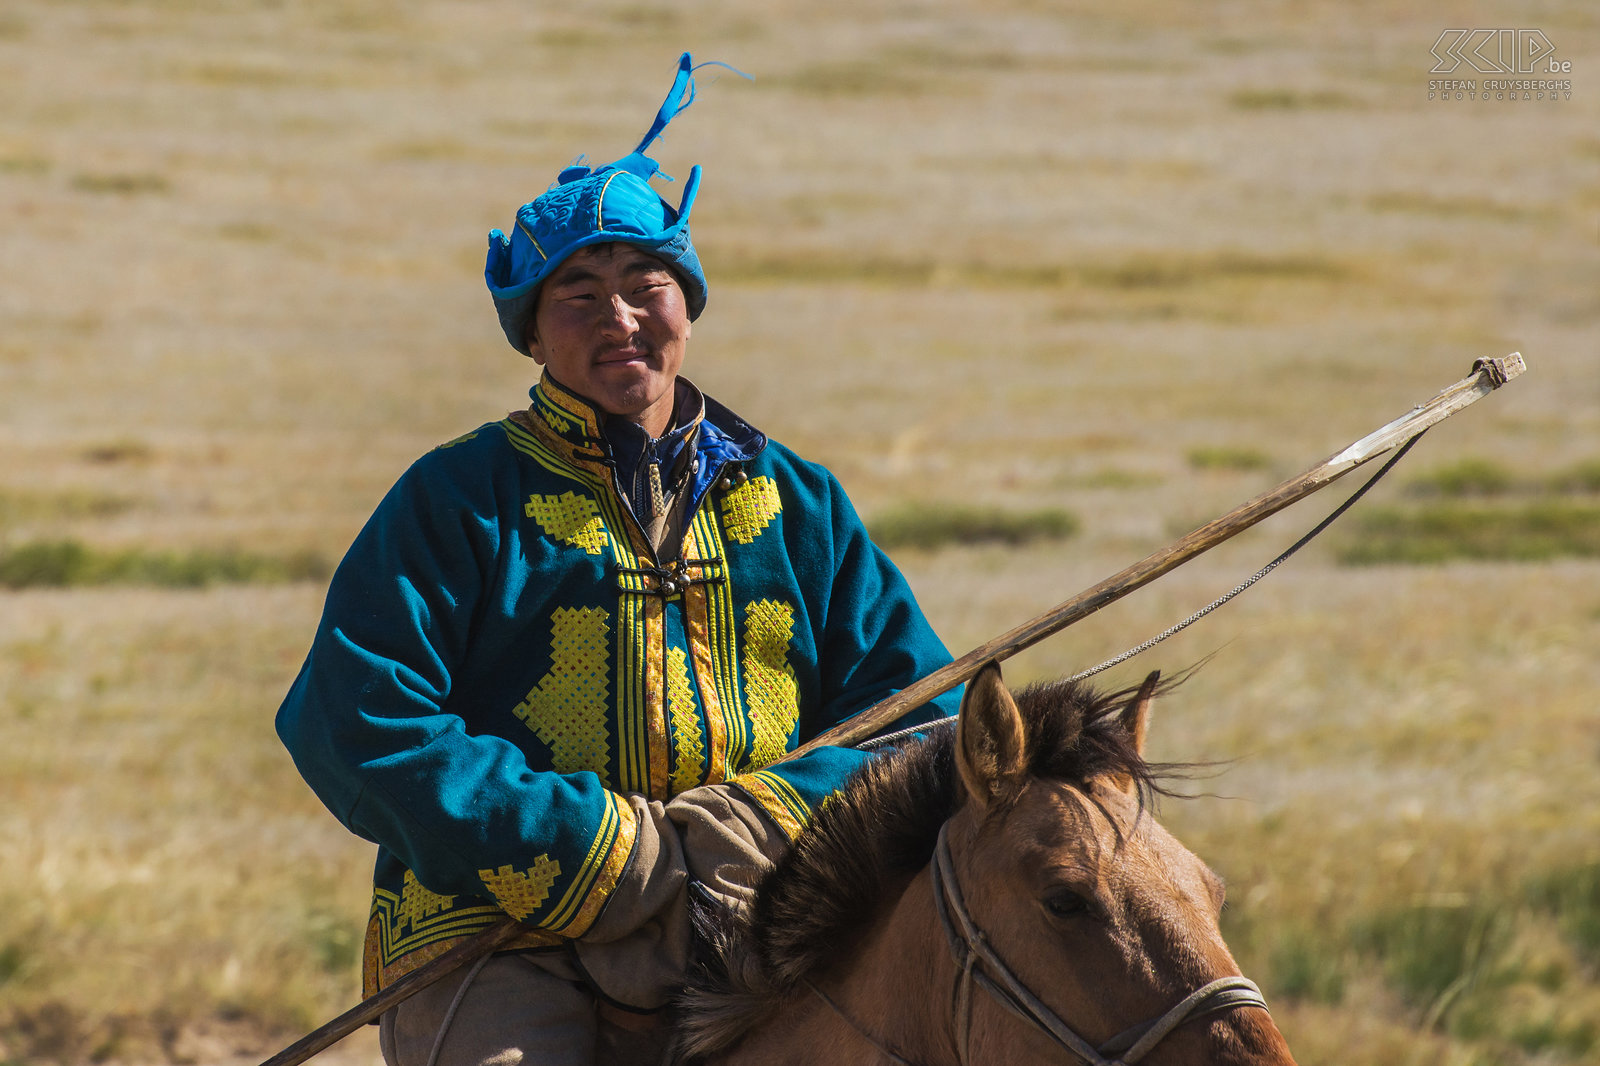 Hustai - Nomade Nomade met traditionele Mongoolse kleding. Stefan Cruysberghs